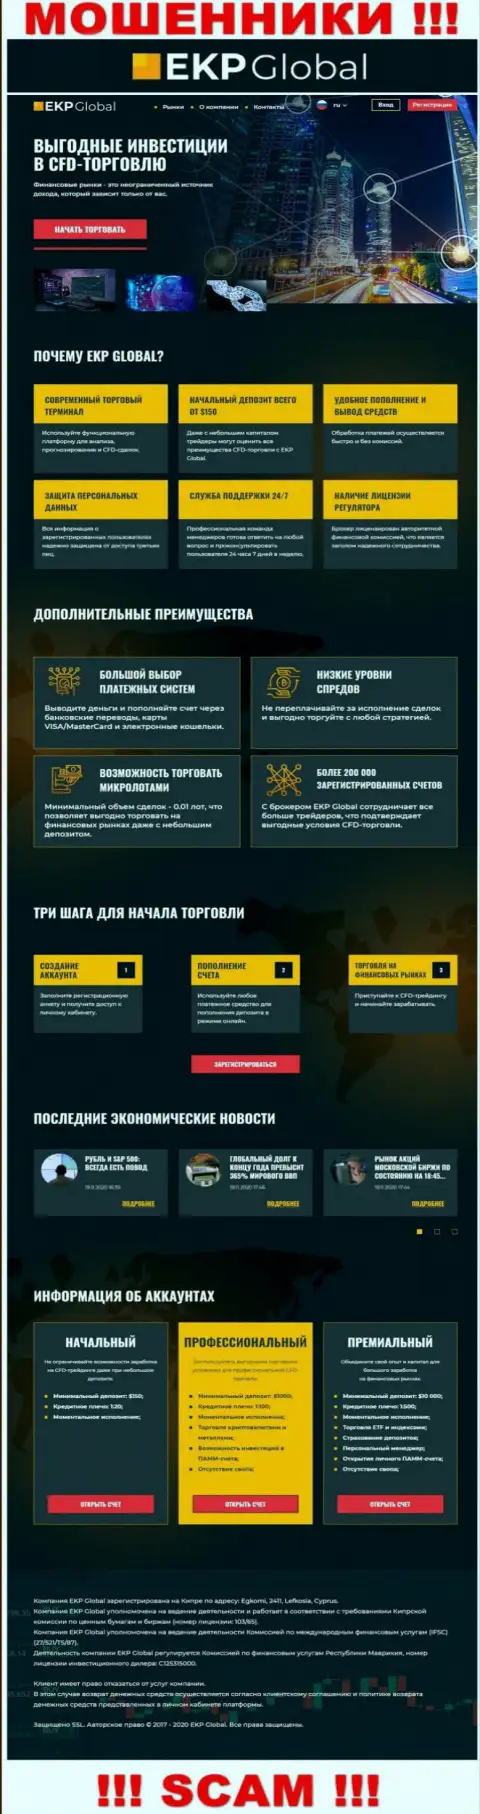 Скрин официального web-сервиса ЕКП-Глобал - EKP-Global Com